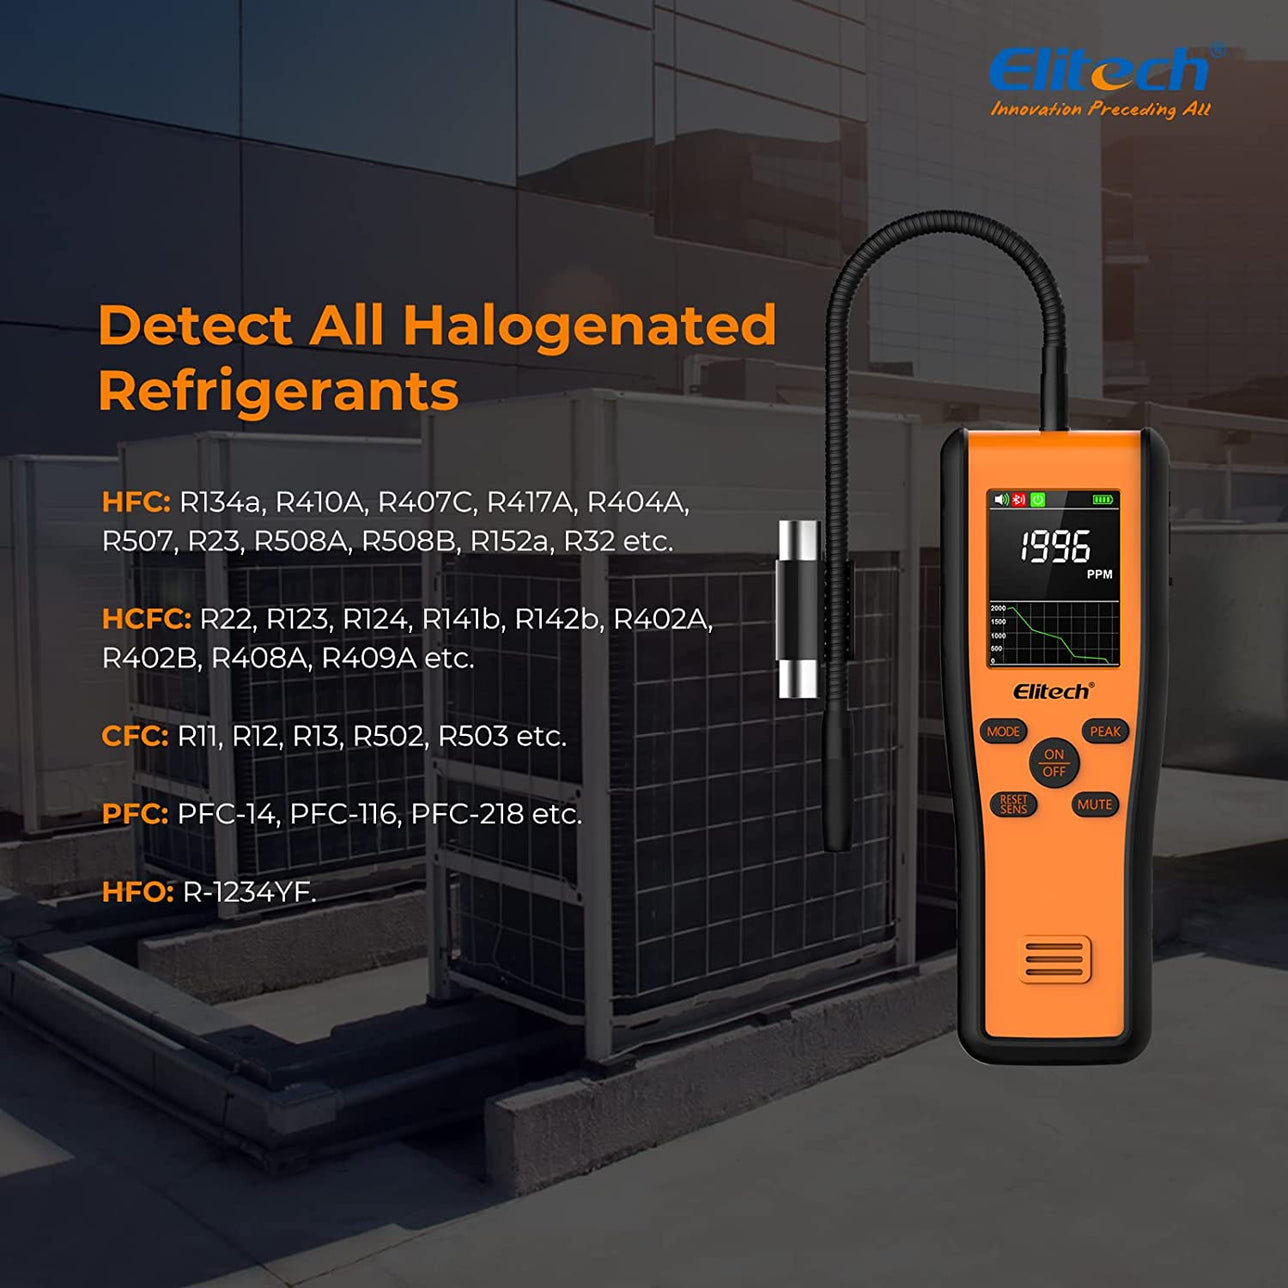 Elitech METRUM Quantitative Refrigerant Heat Pump Leak Detector PPM Readings for HVAC/R and Auto AC Service